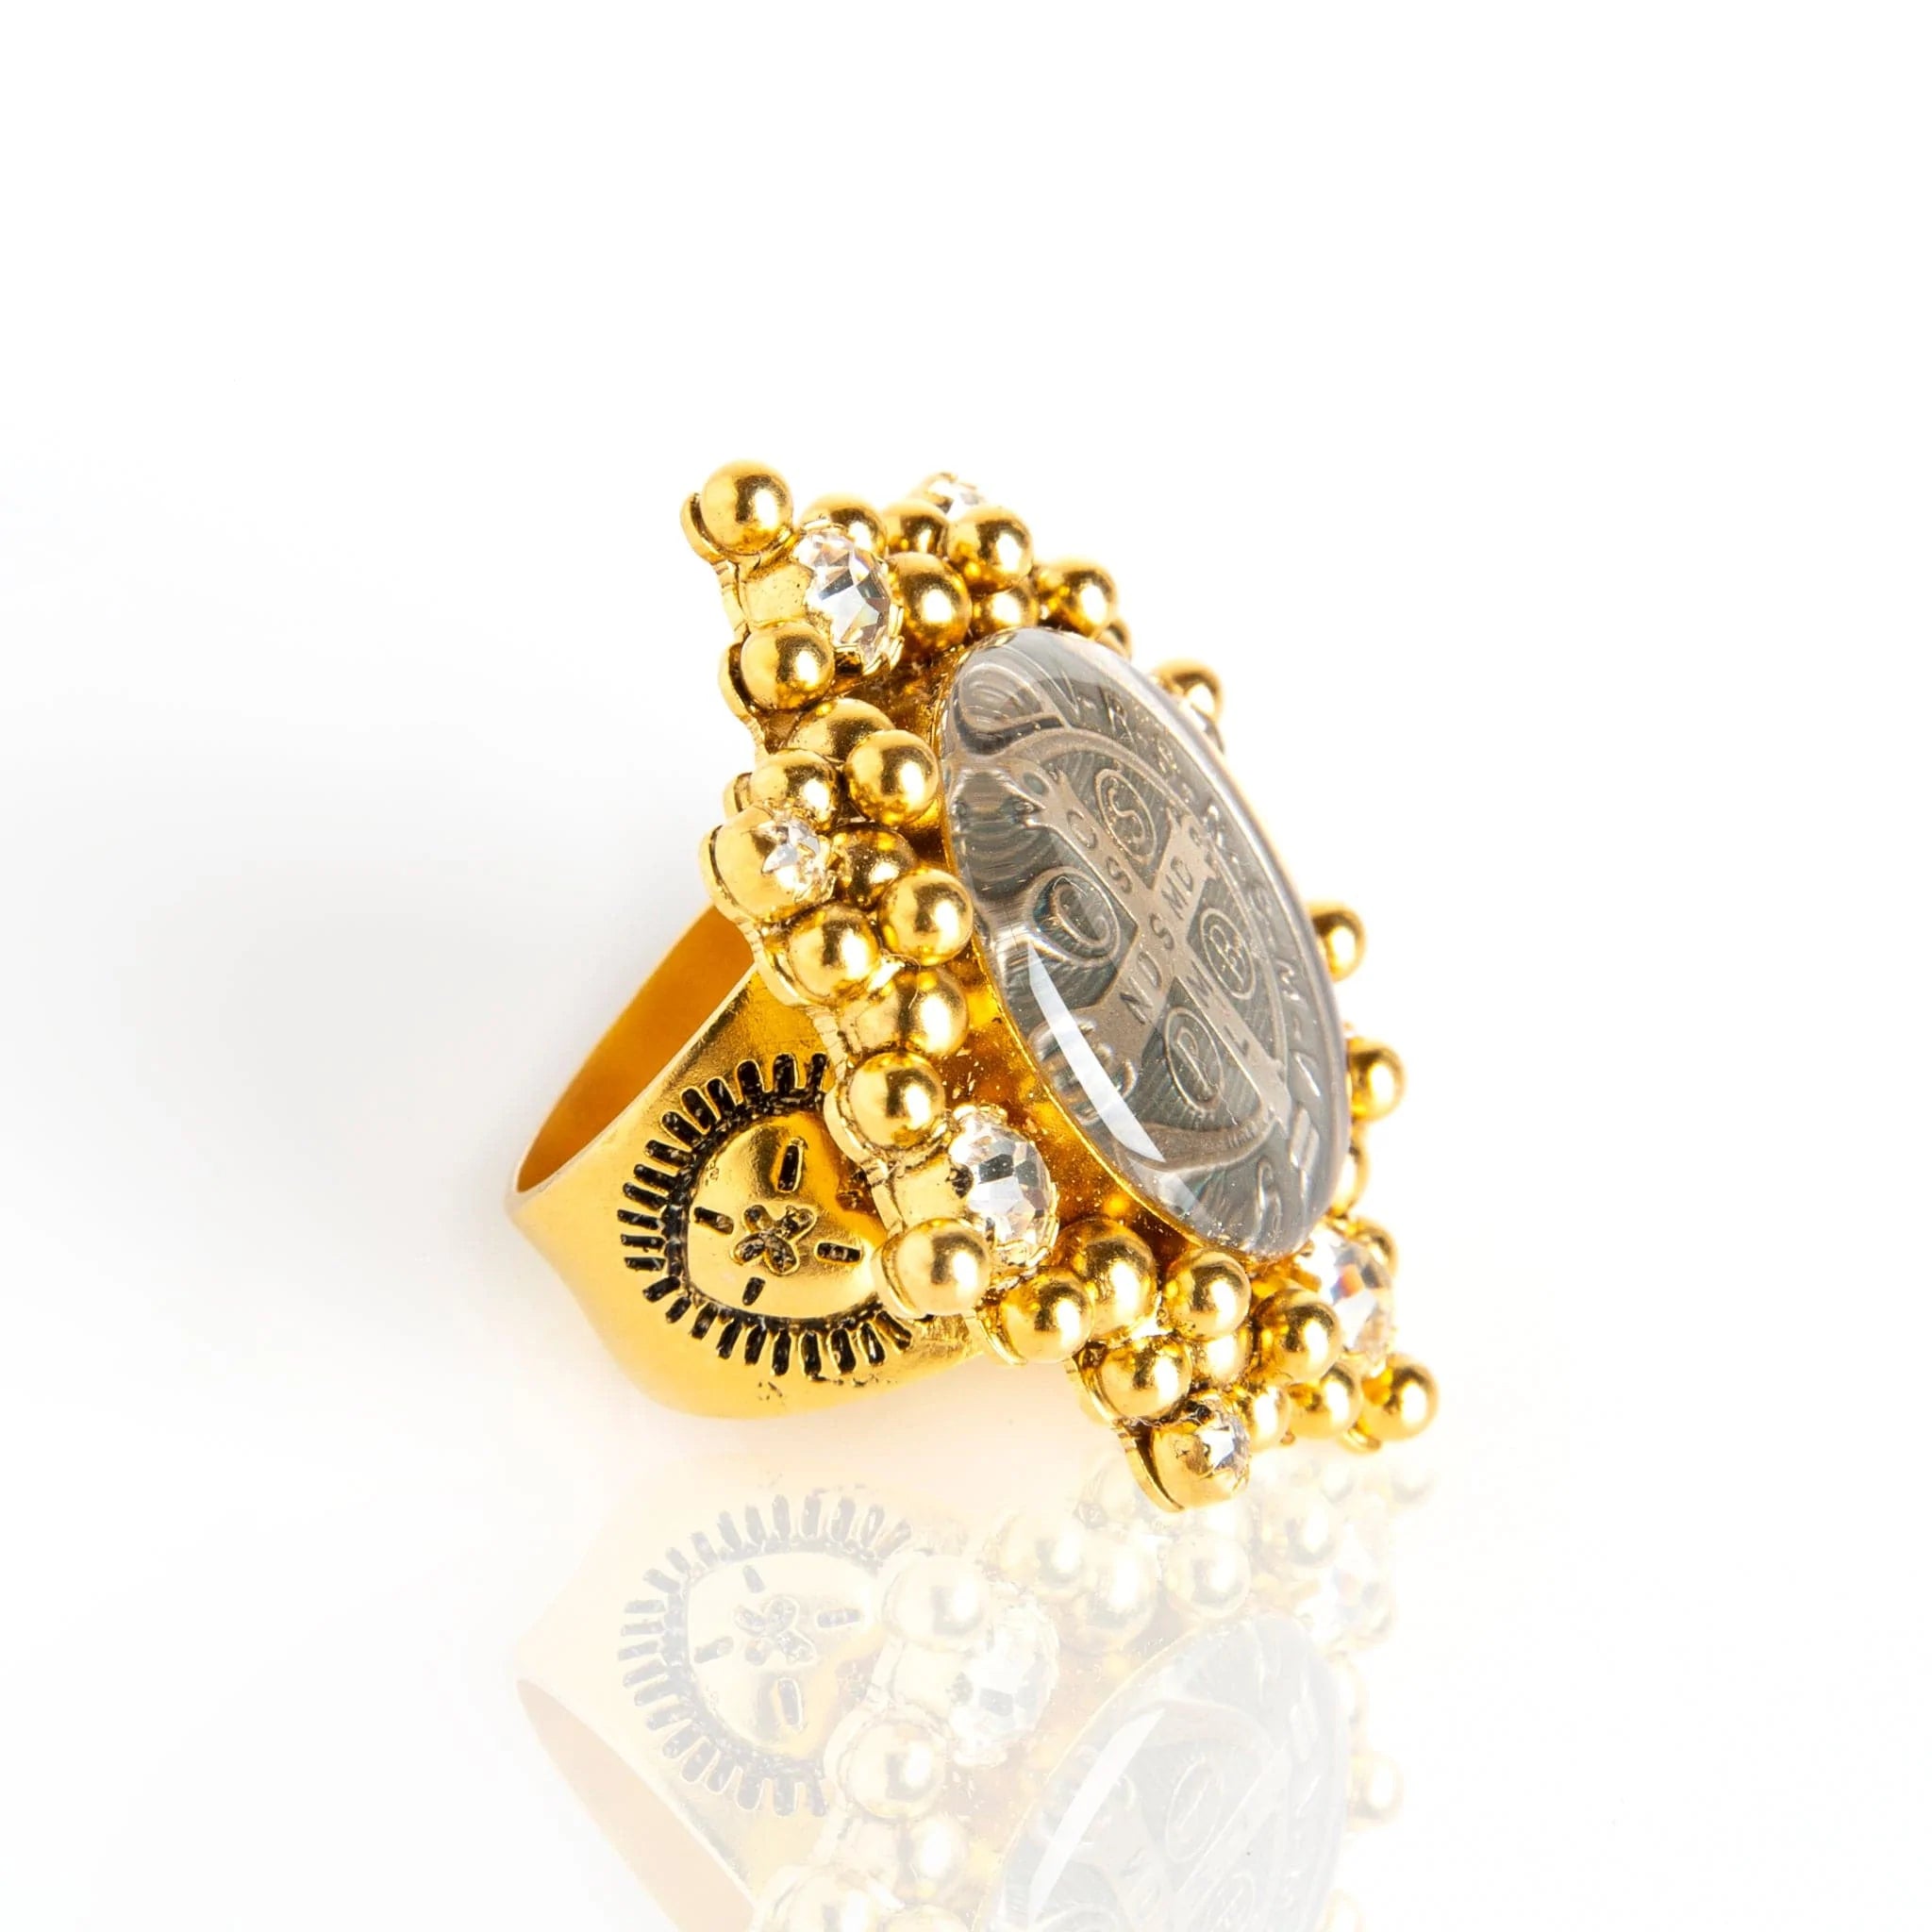 Coin Ring, Big Men's Ring, Heavy Ring, Round Ring, 14K Gold, Diamonds - Etsy